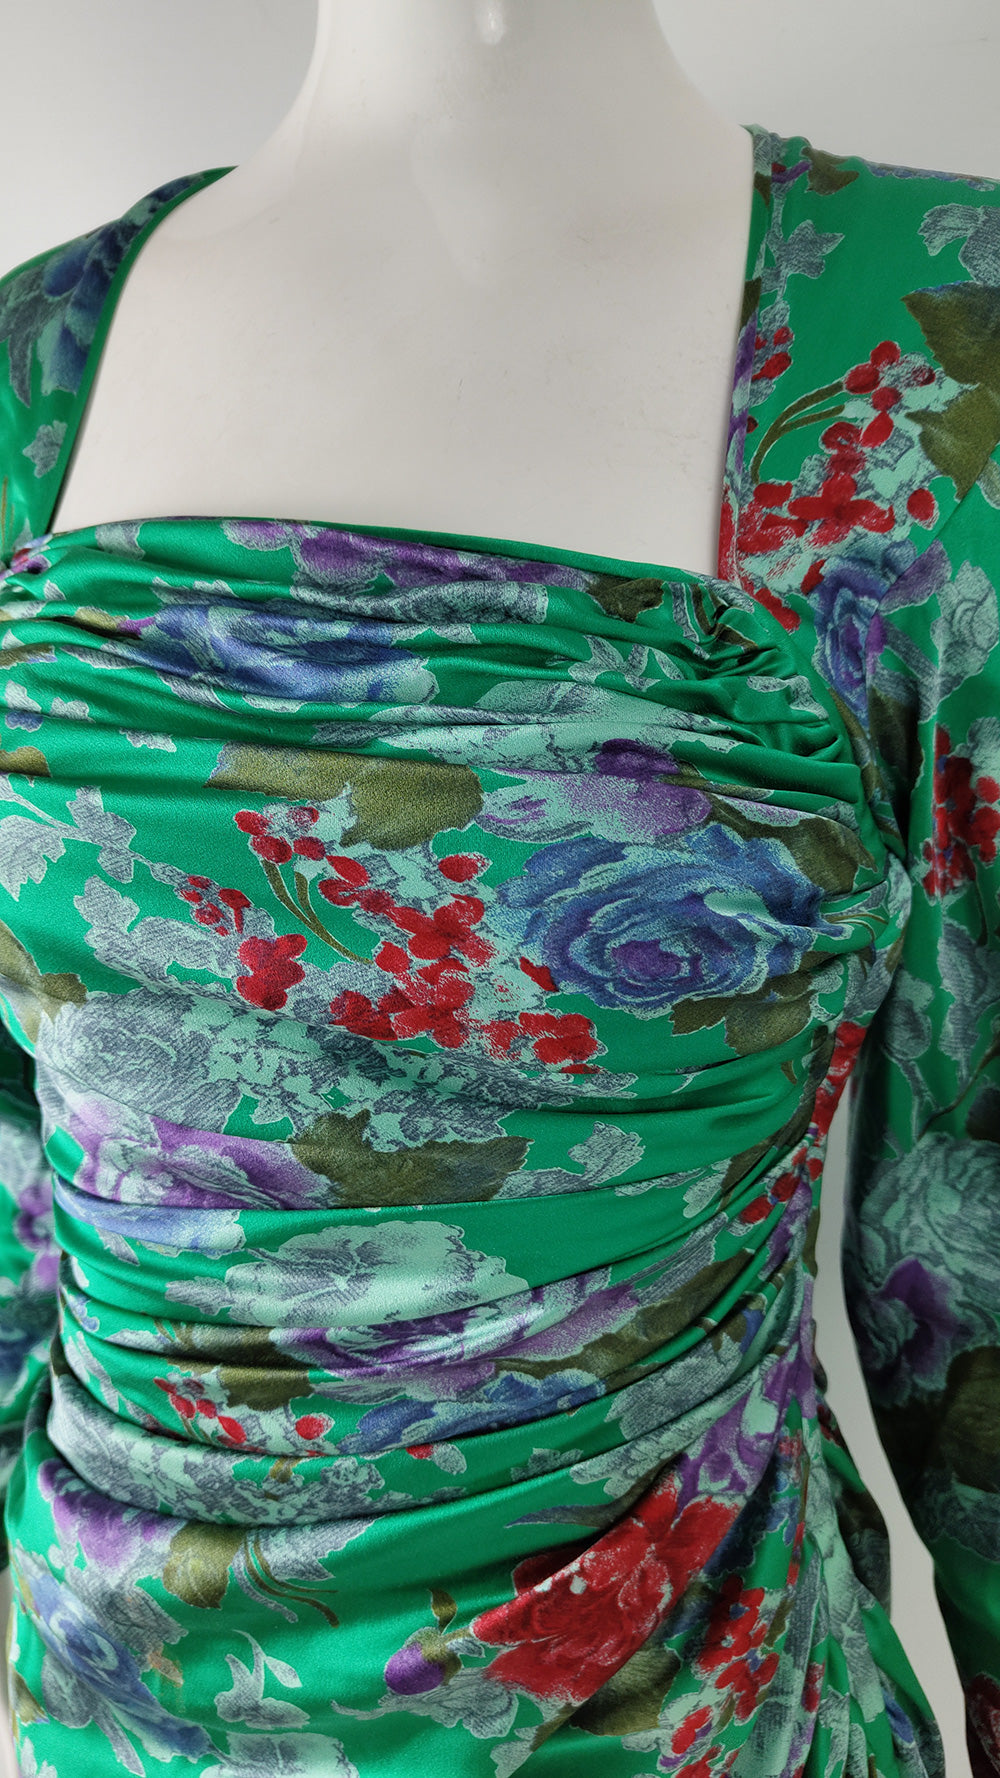 Emanuel Ungaro Vintage Green Silk Satin Ruched Dress, 1980s